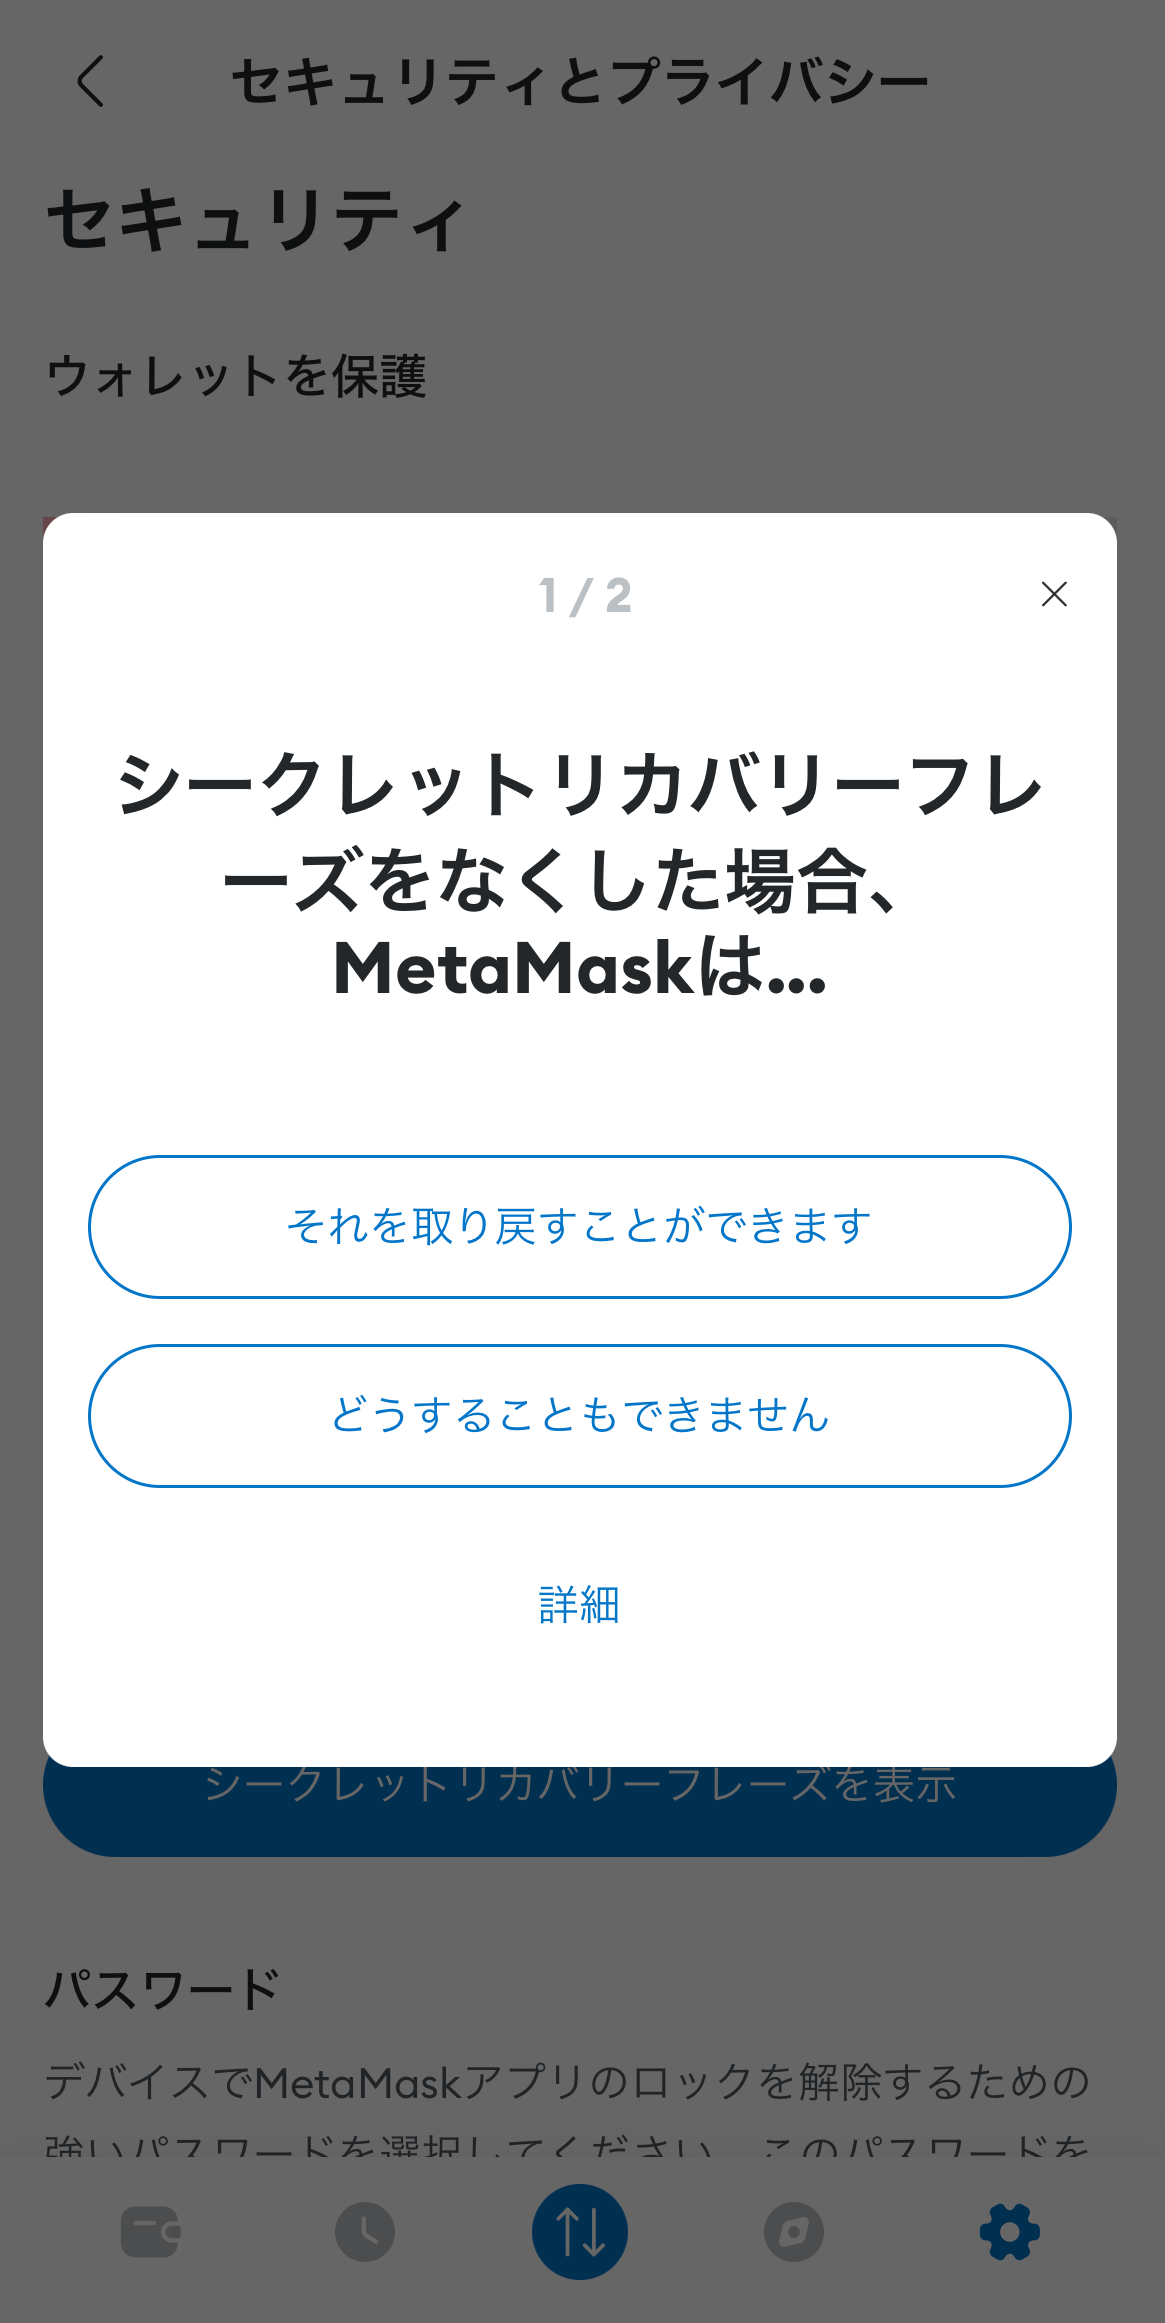 MetaMask（メタマスク）でリカバリーフレーズを確認